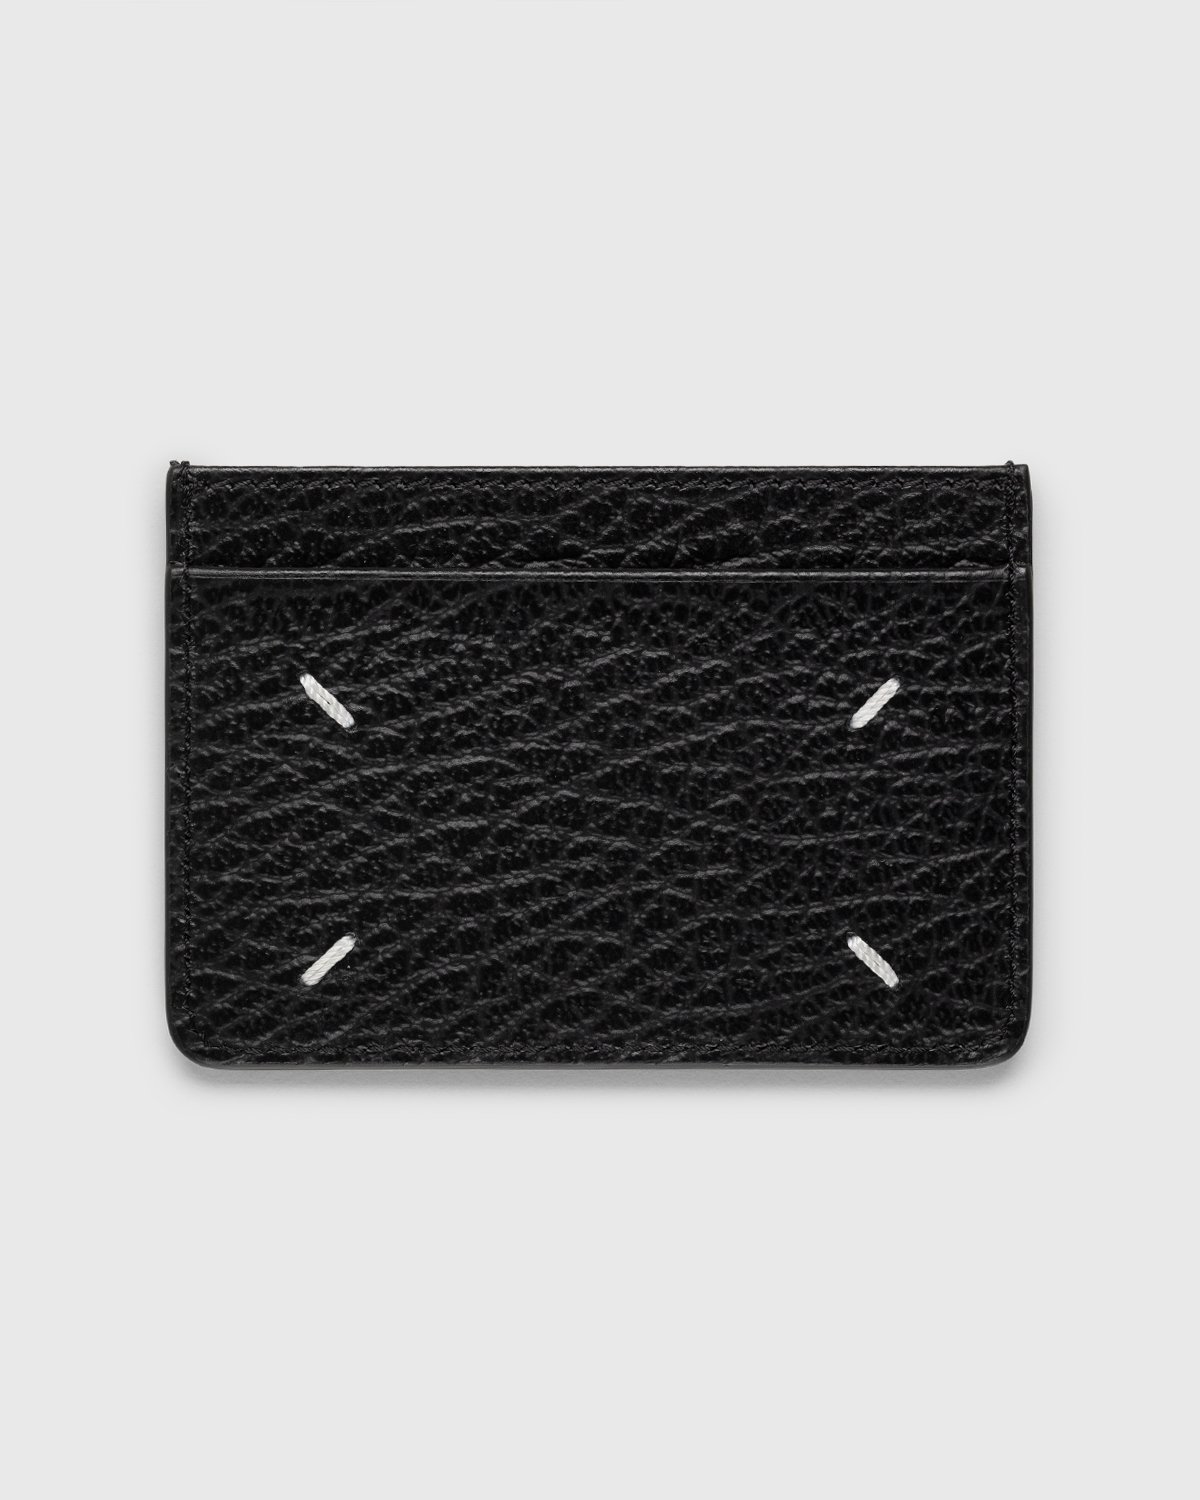 Maison Margiela - Leather Card Holder Black - Accessories - Black - Image 1